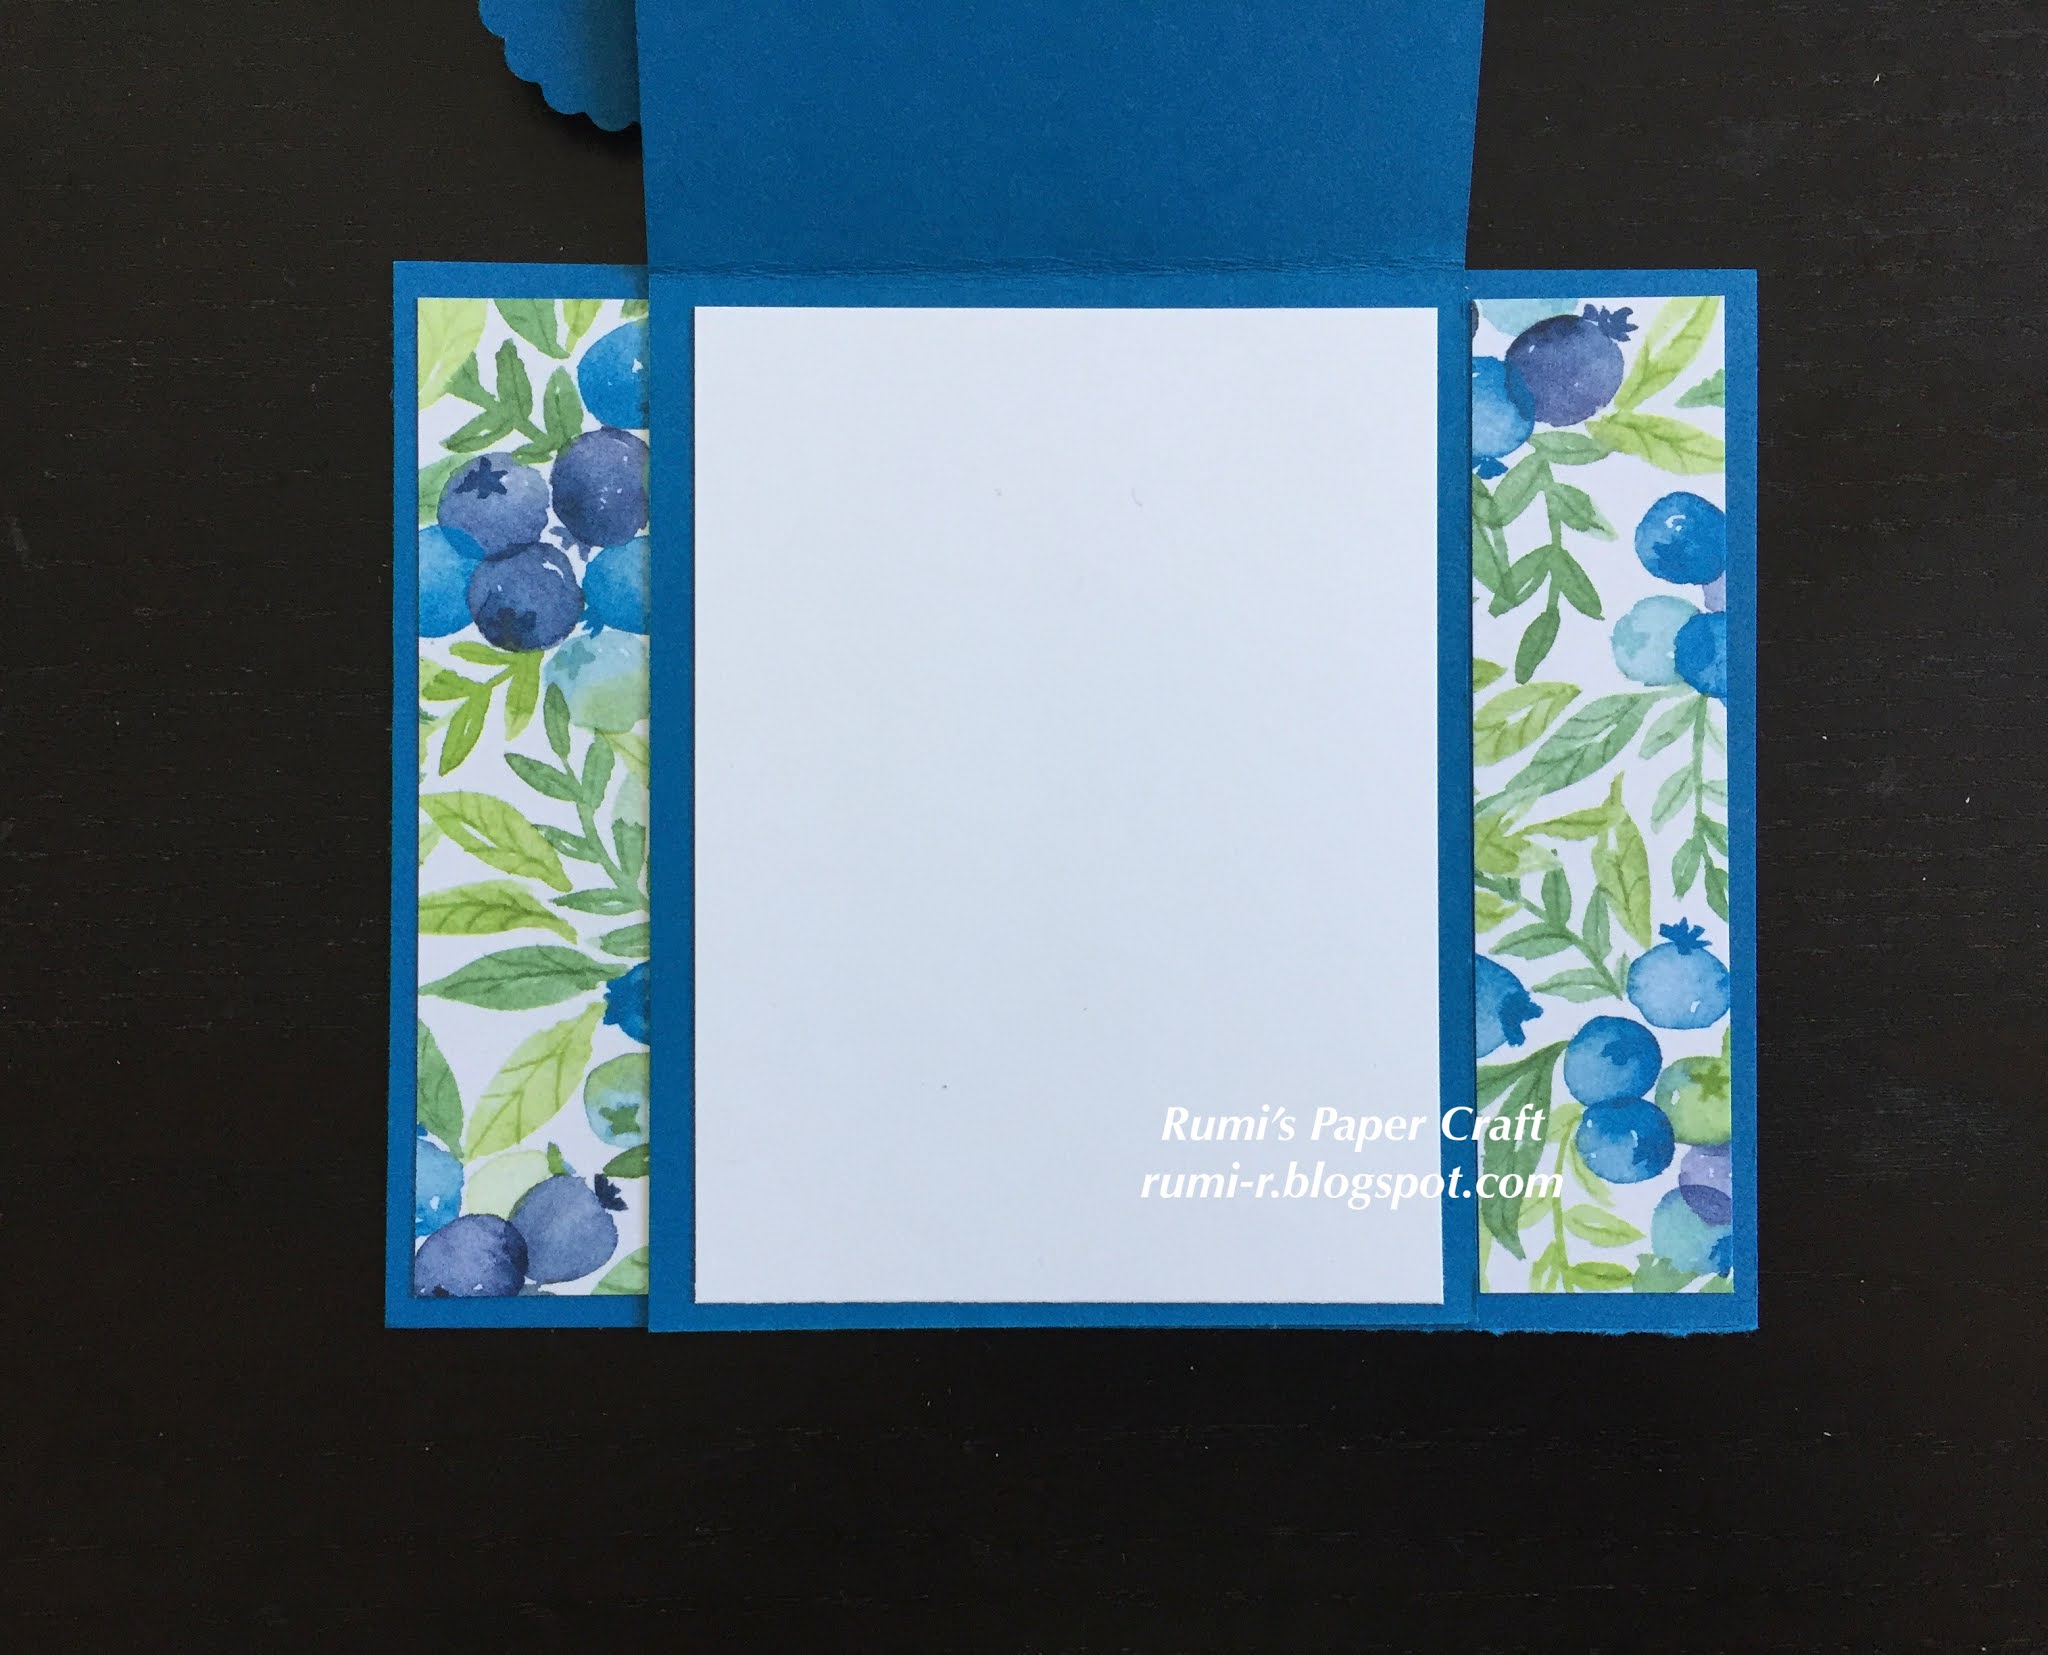 Rumi's Paper Craft スタンピンアップ手作りカード: